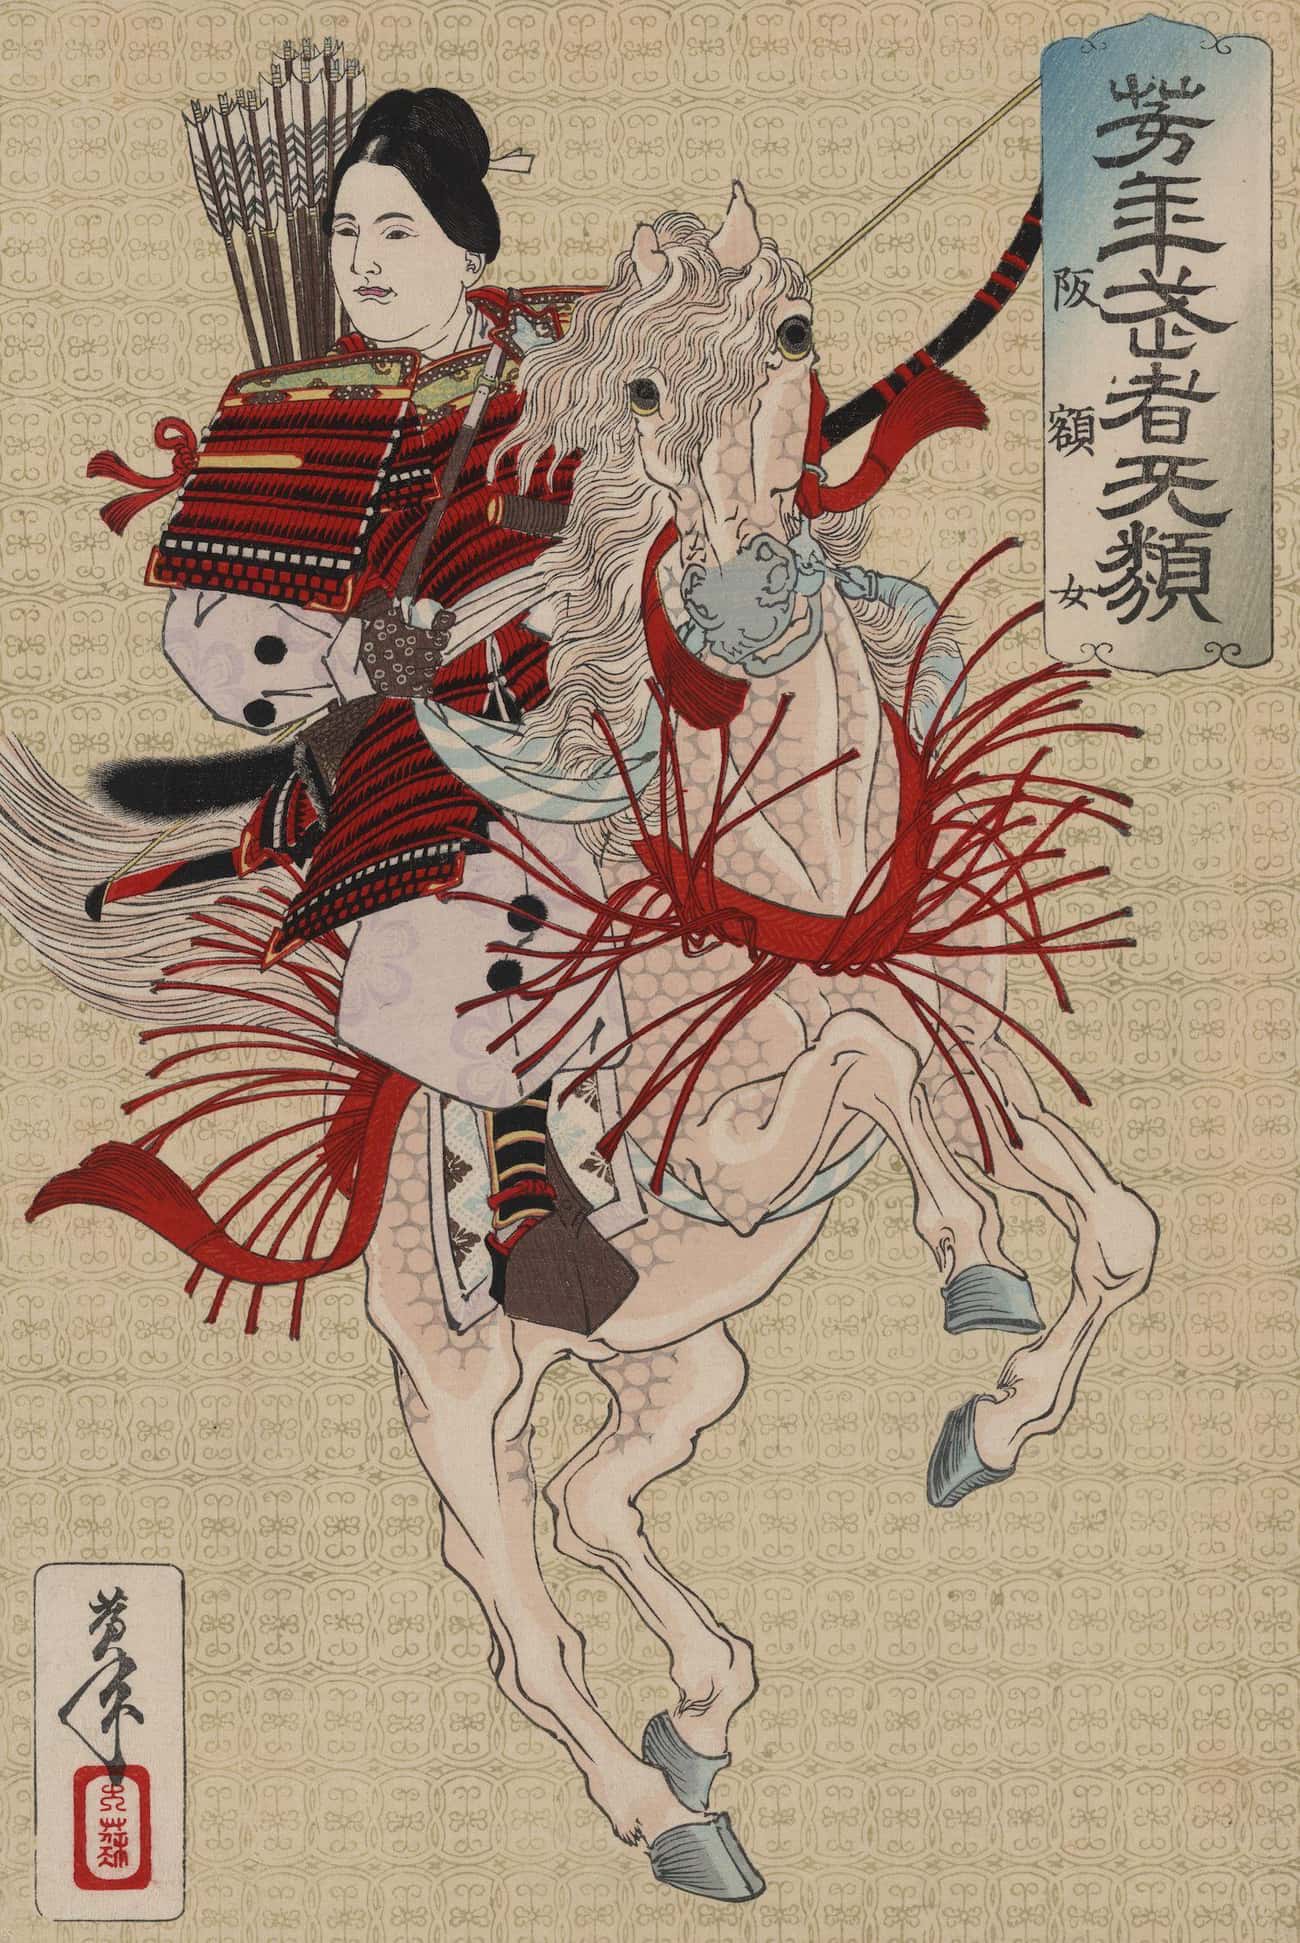 Tomoe Gozen, A Female Samurai, Once Took Home Seven Heads In One Battle